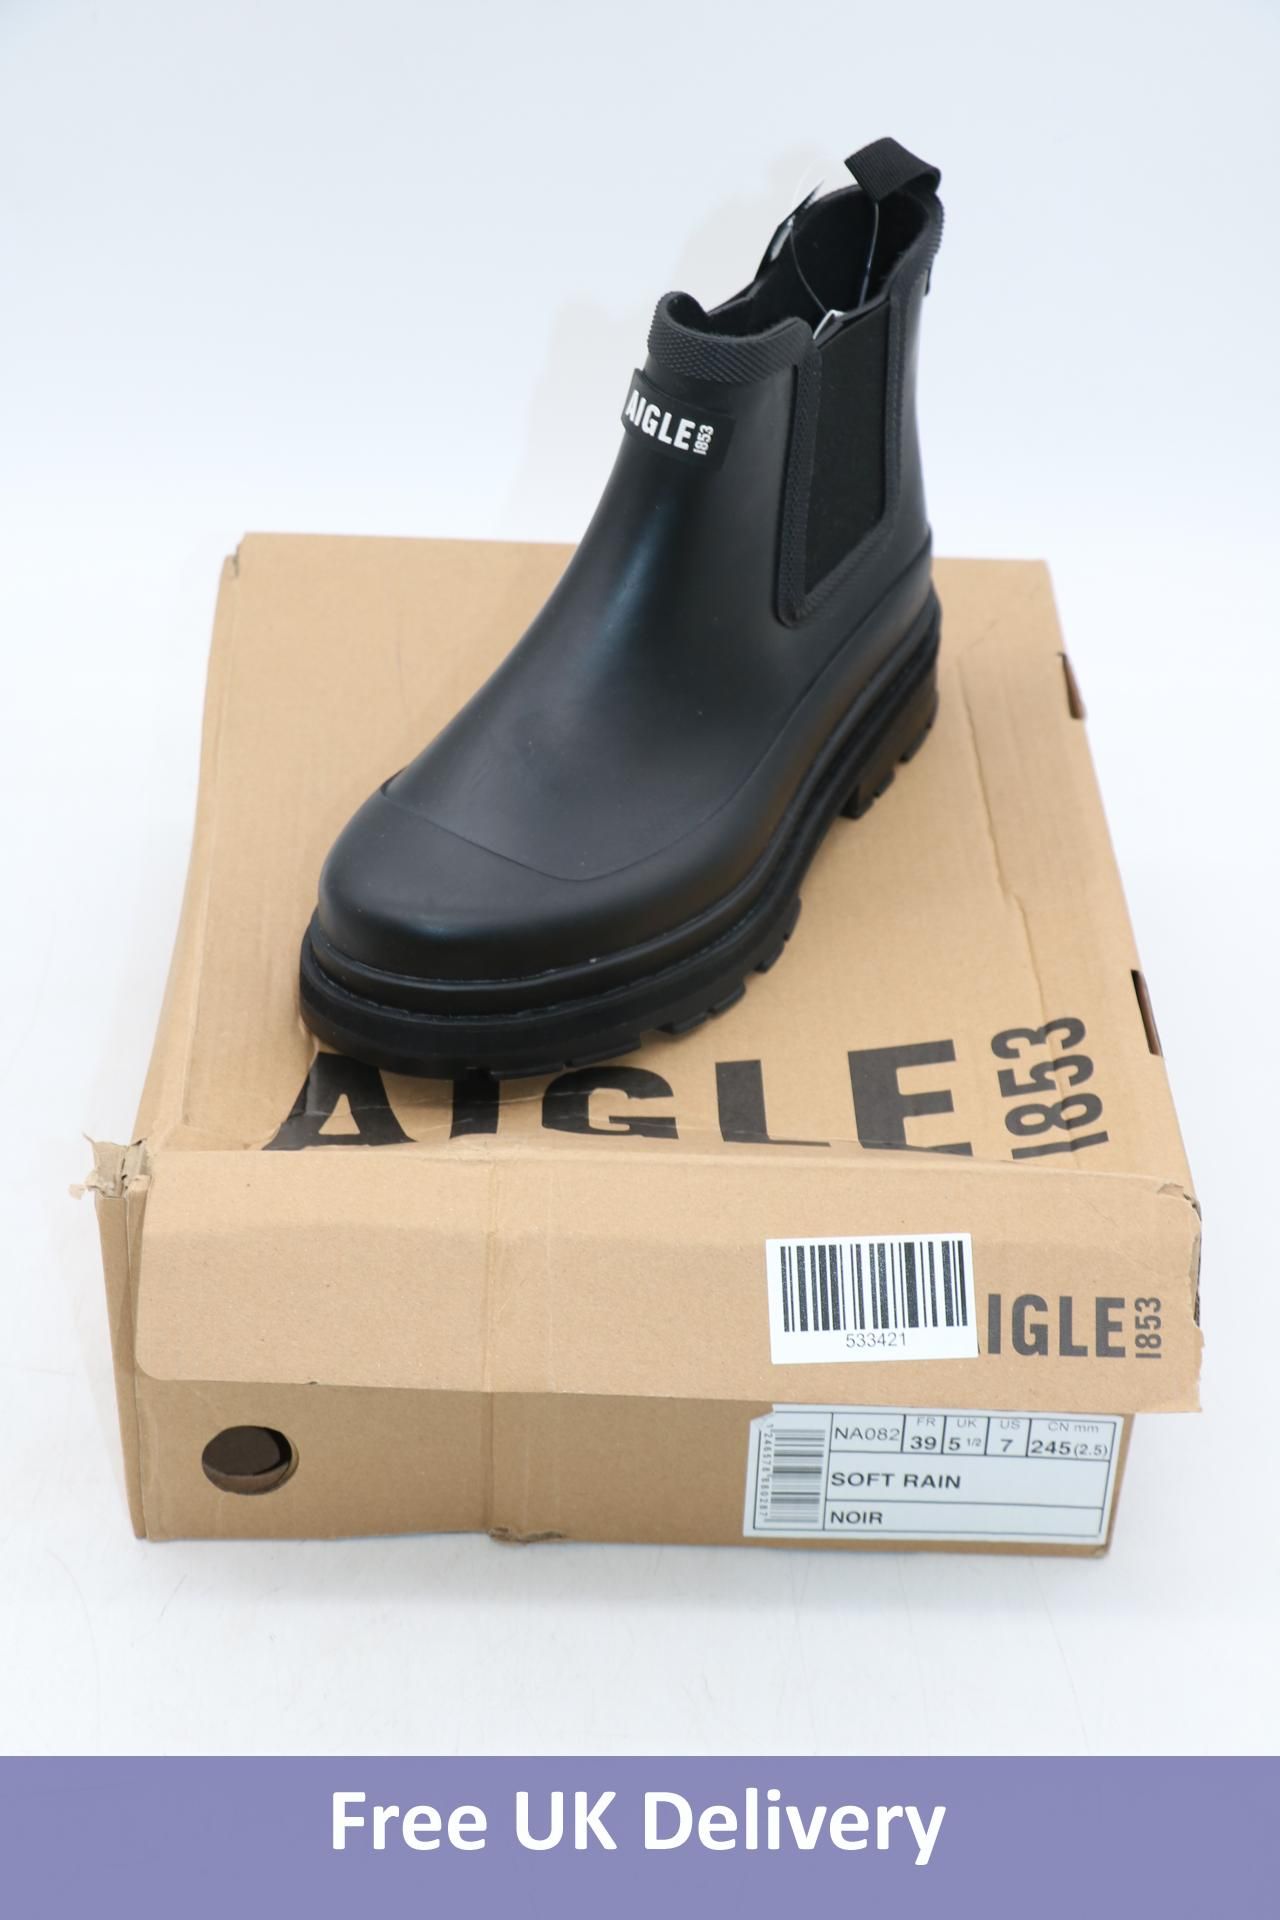 Aigle Soft Rain Carville Leather Boots, Black, UK 5.5. Box damaged